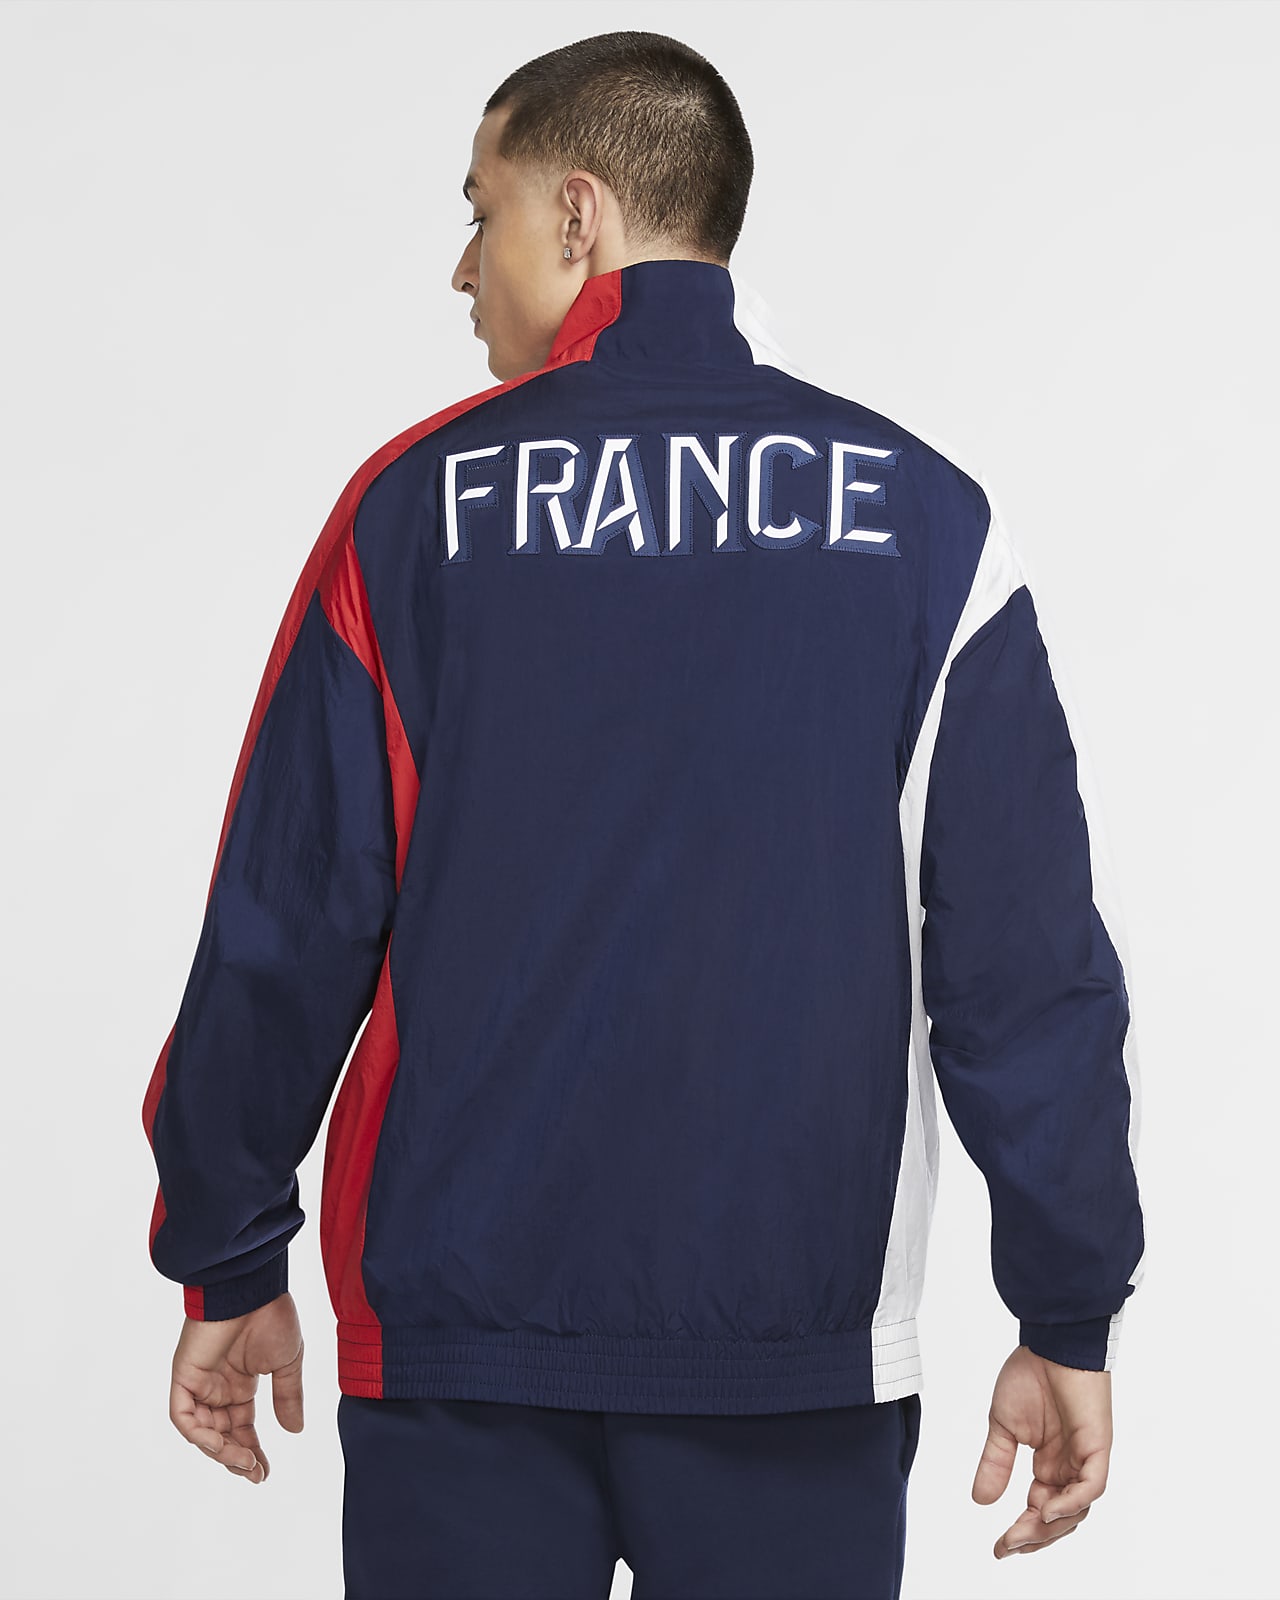 France Air Jordan Men's Tracksuit Jacket. Nike LU